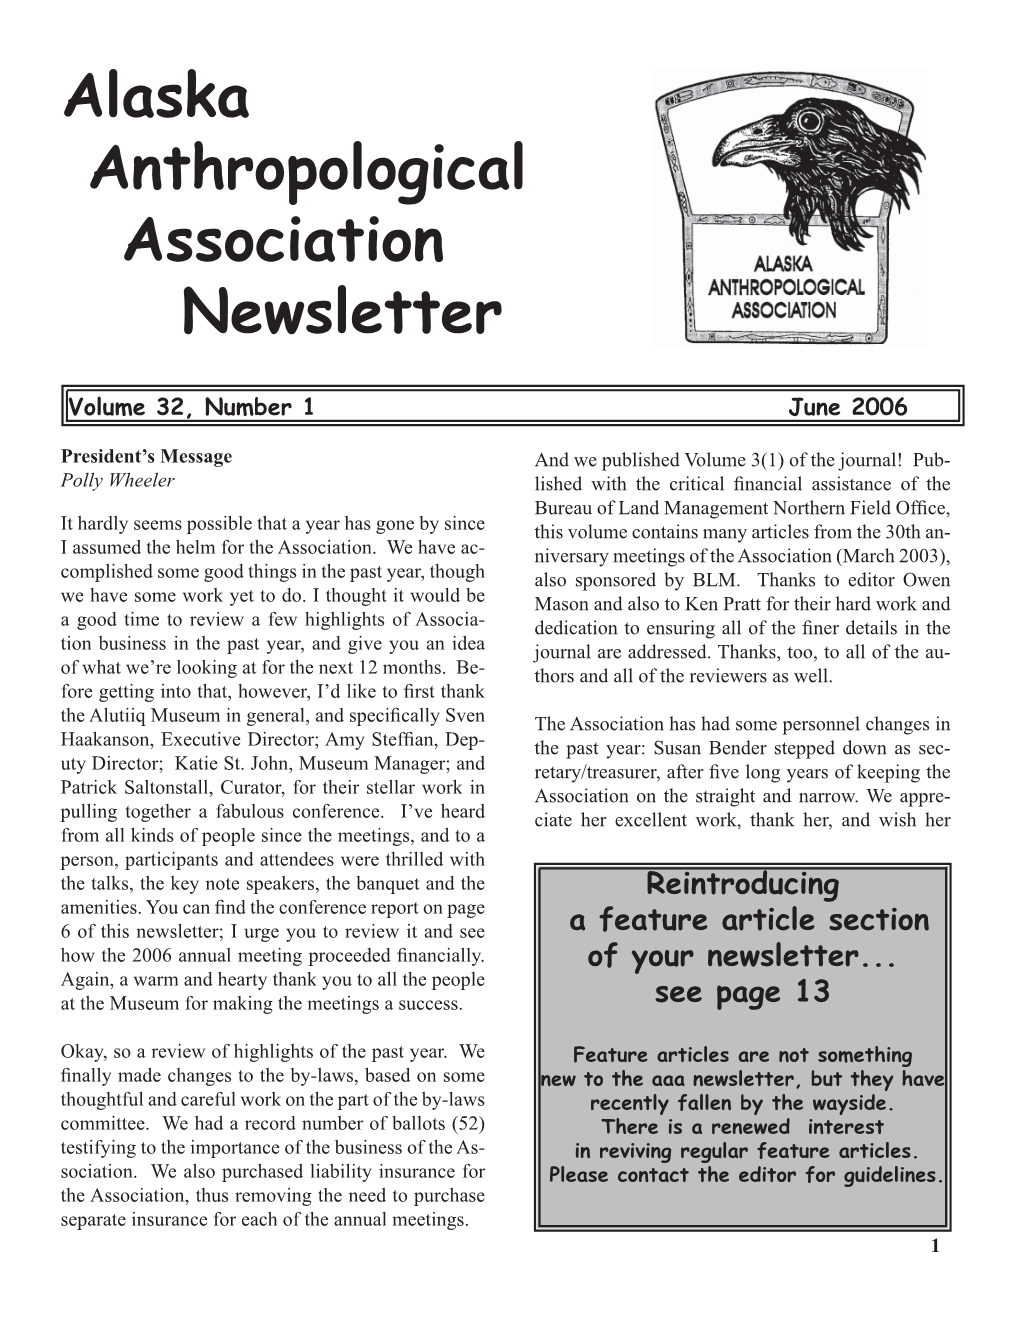 Alaska Anthropological Association Newsletter